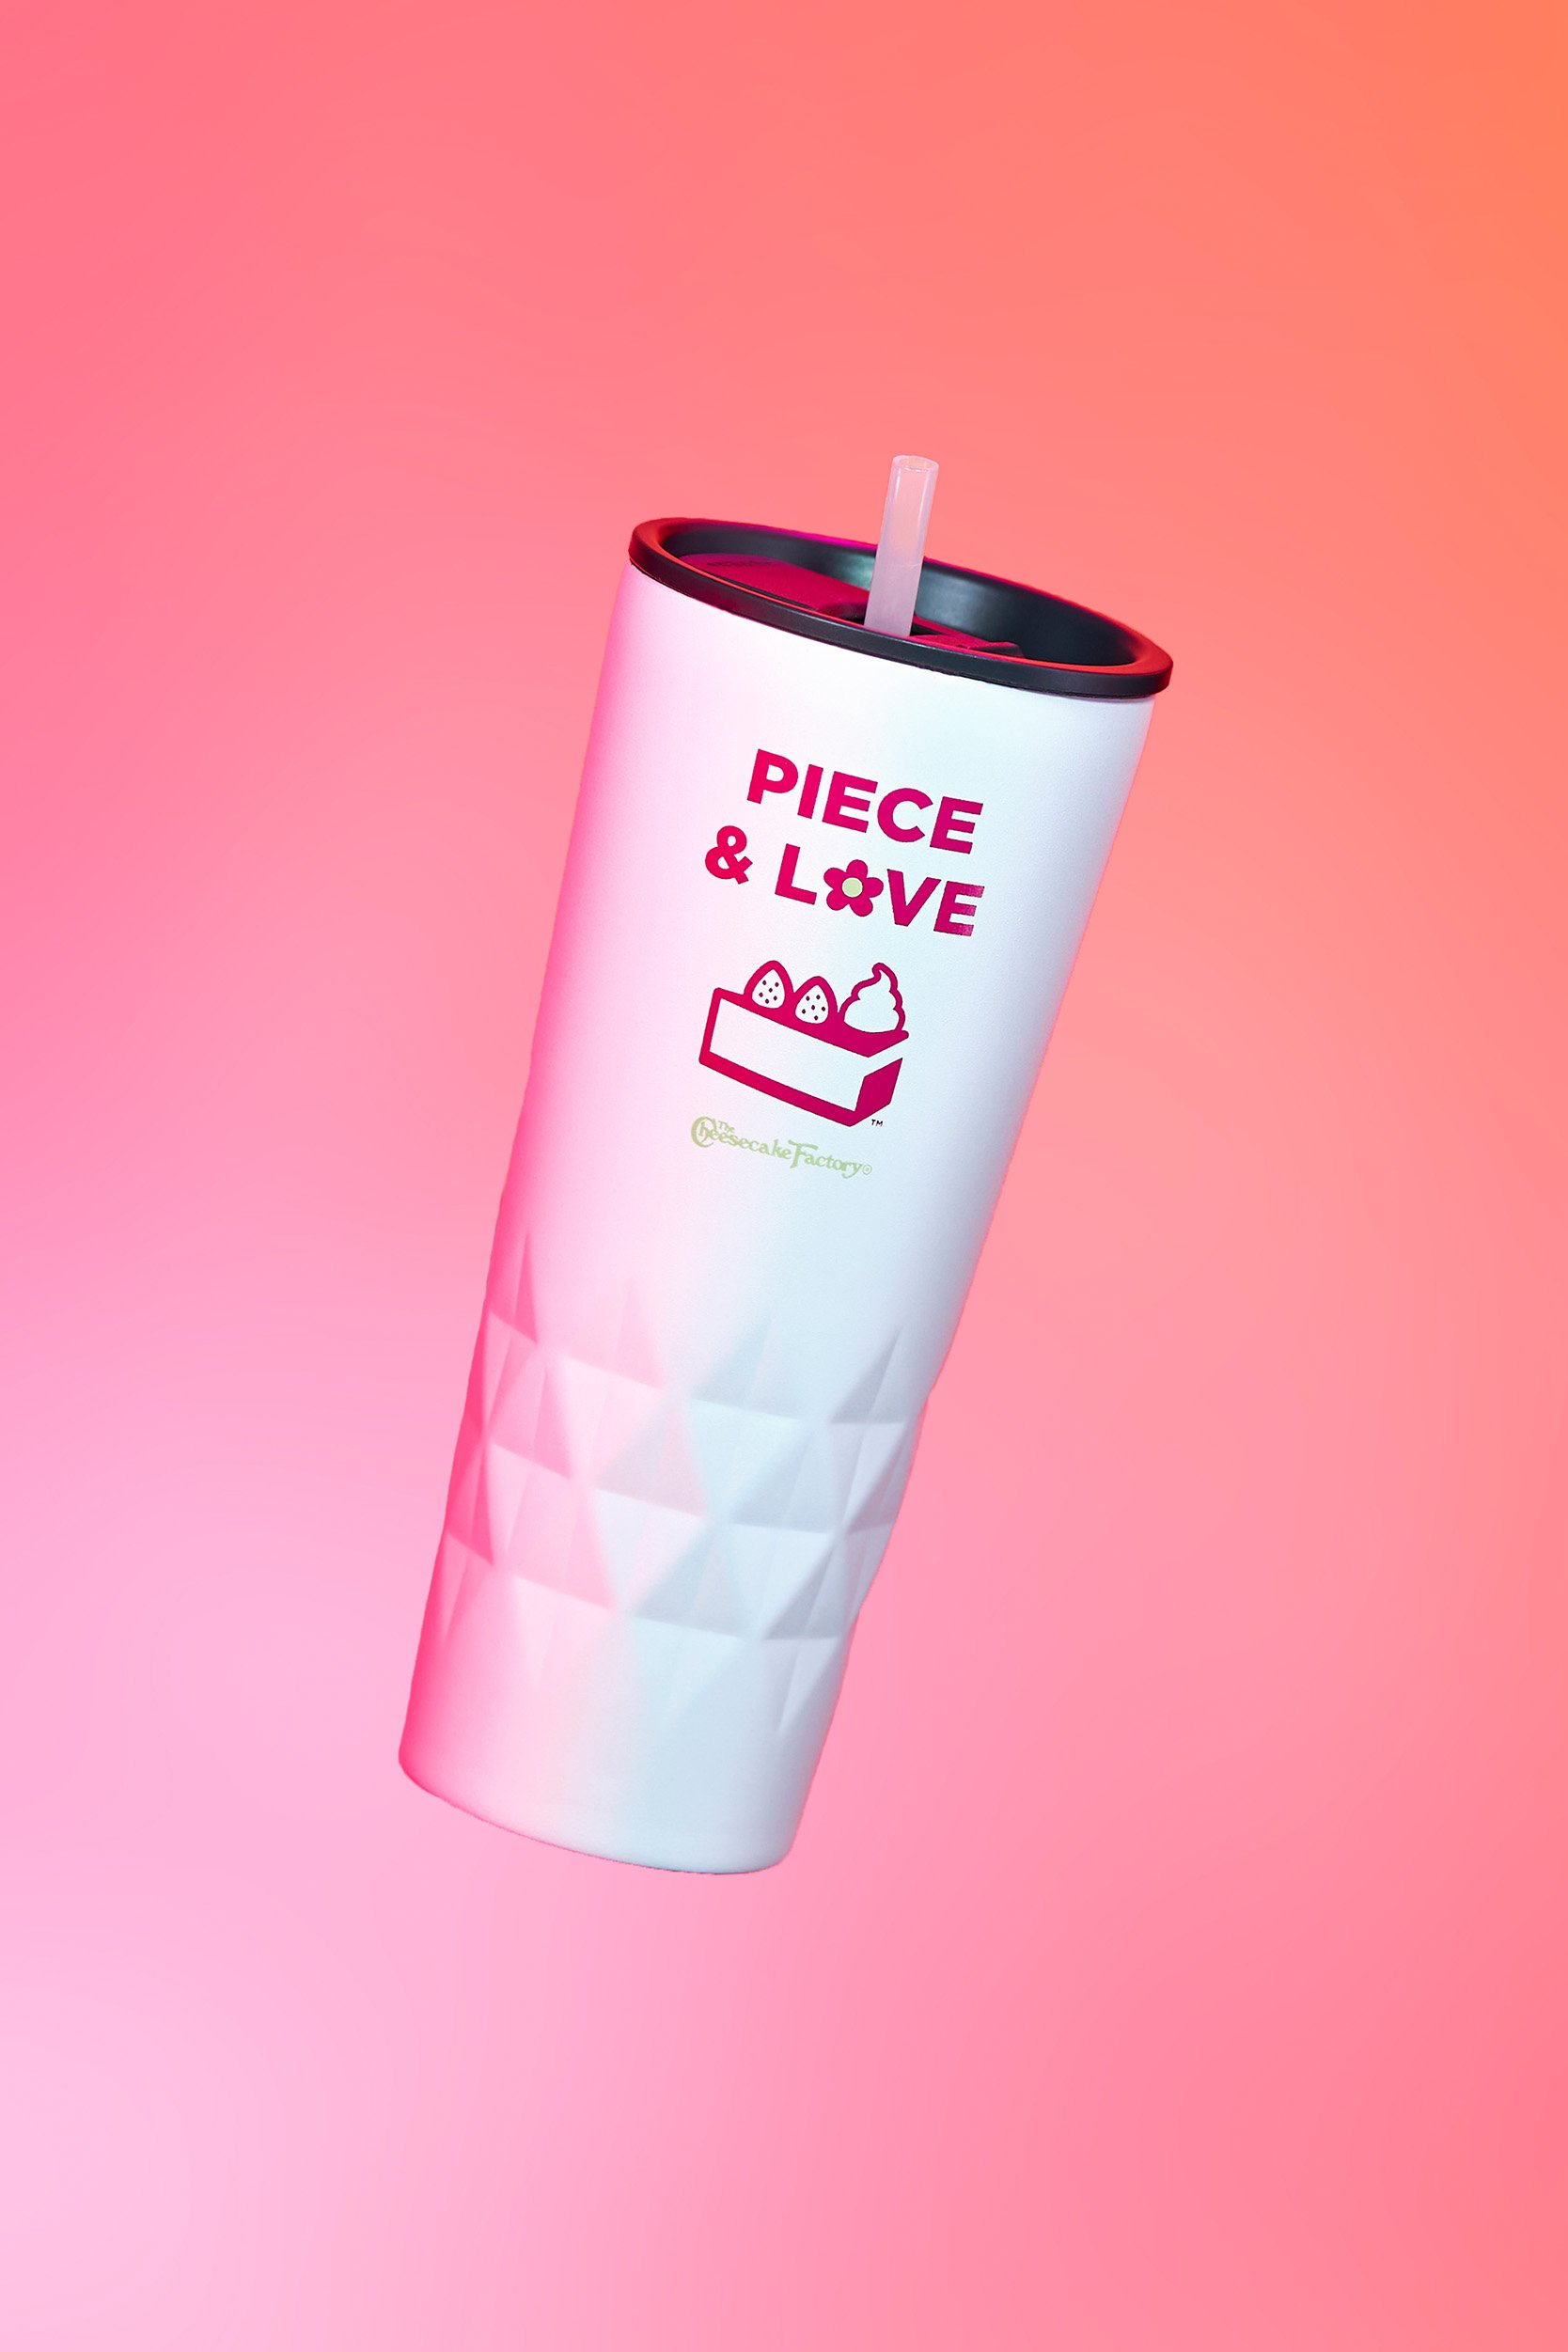 Piece & Love Tumbler image1_2x3_24.jpg